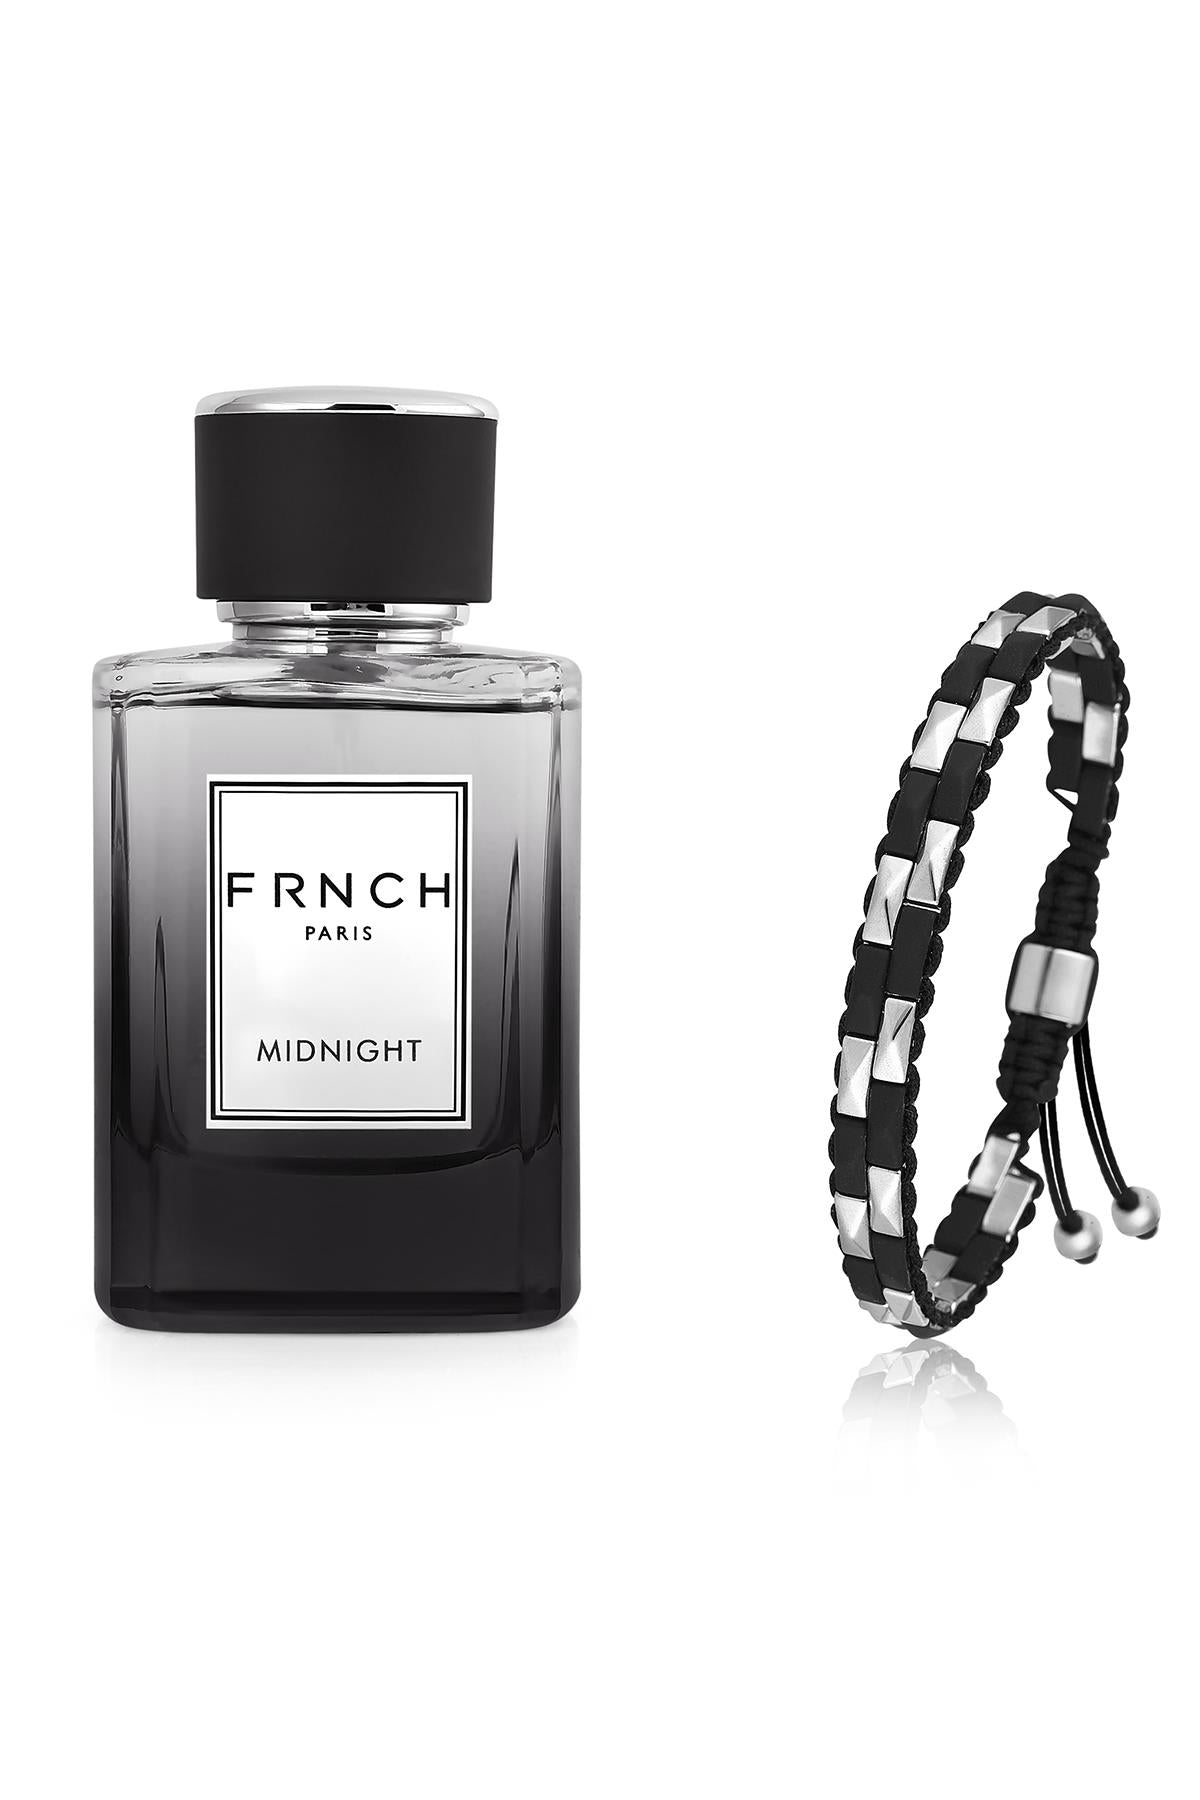 FRNCH Midnight Erkek Parfüm 100 ML Erkek Bileklik Hediyeli FRP10005-105-E